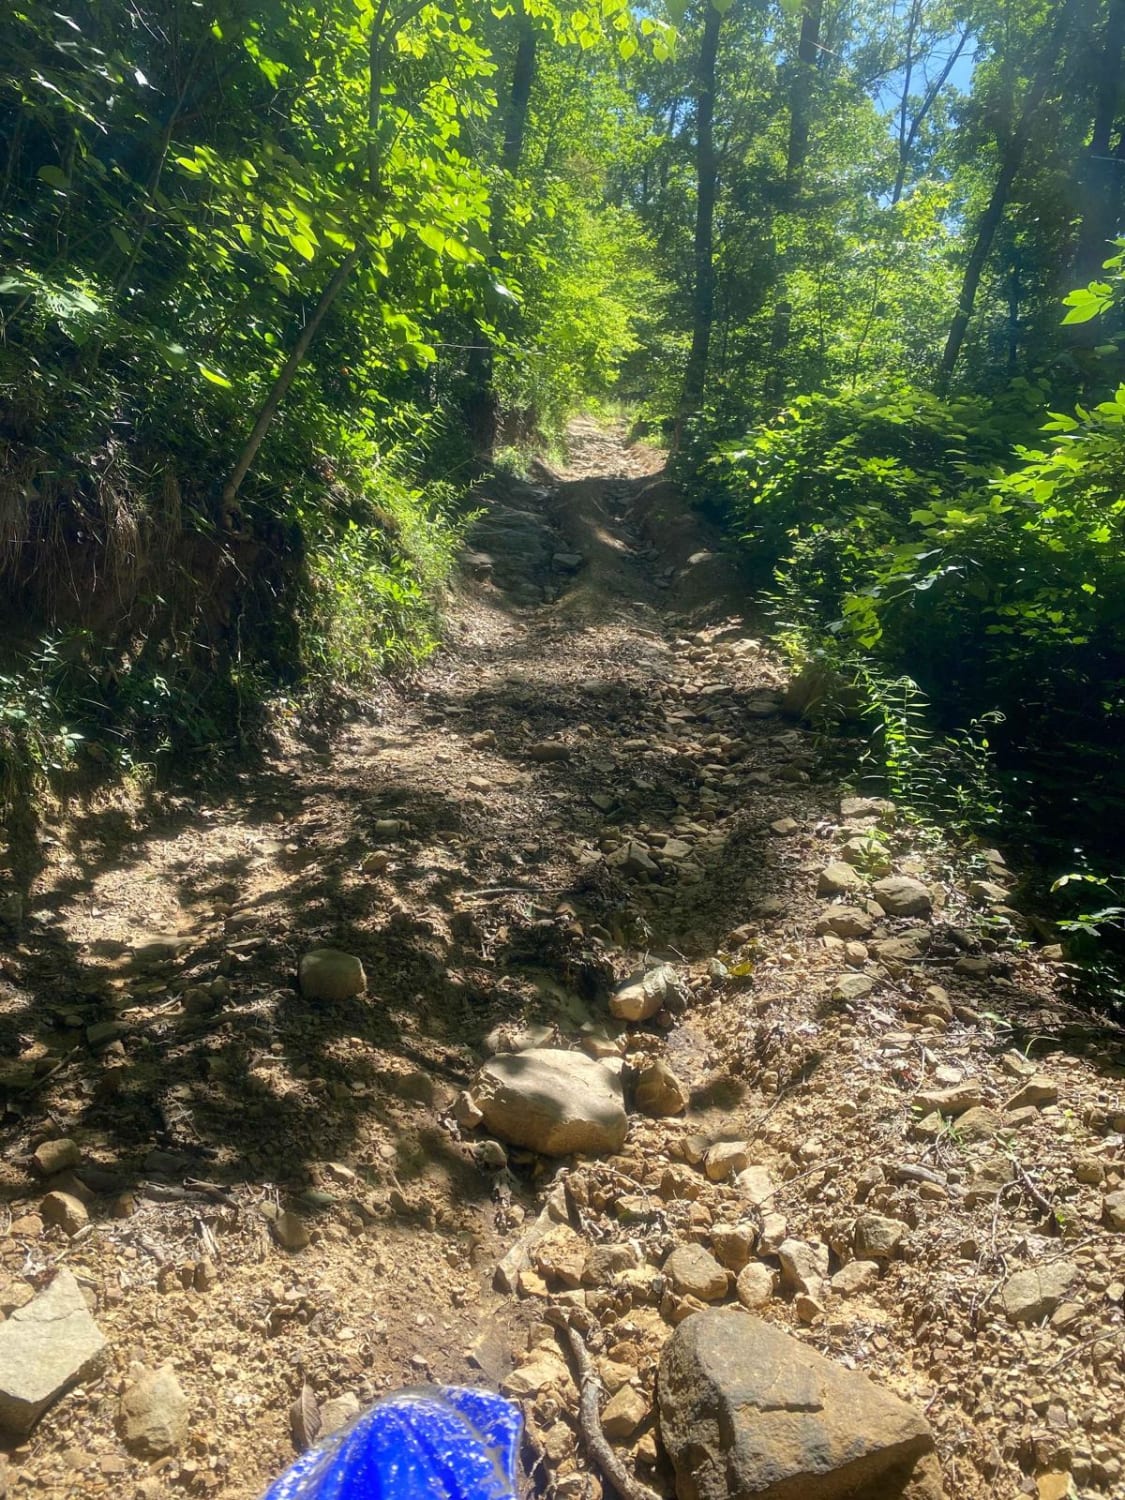 Trail 6